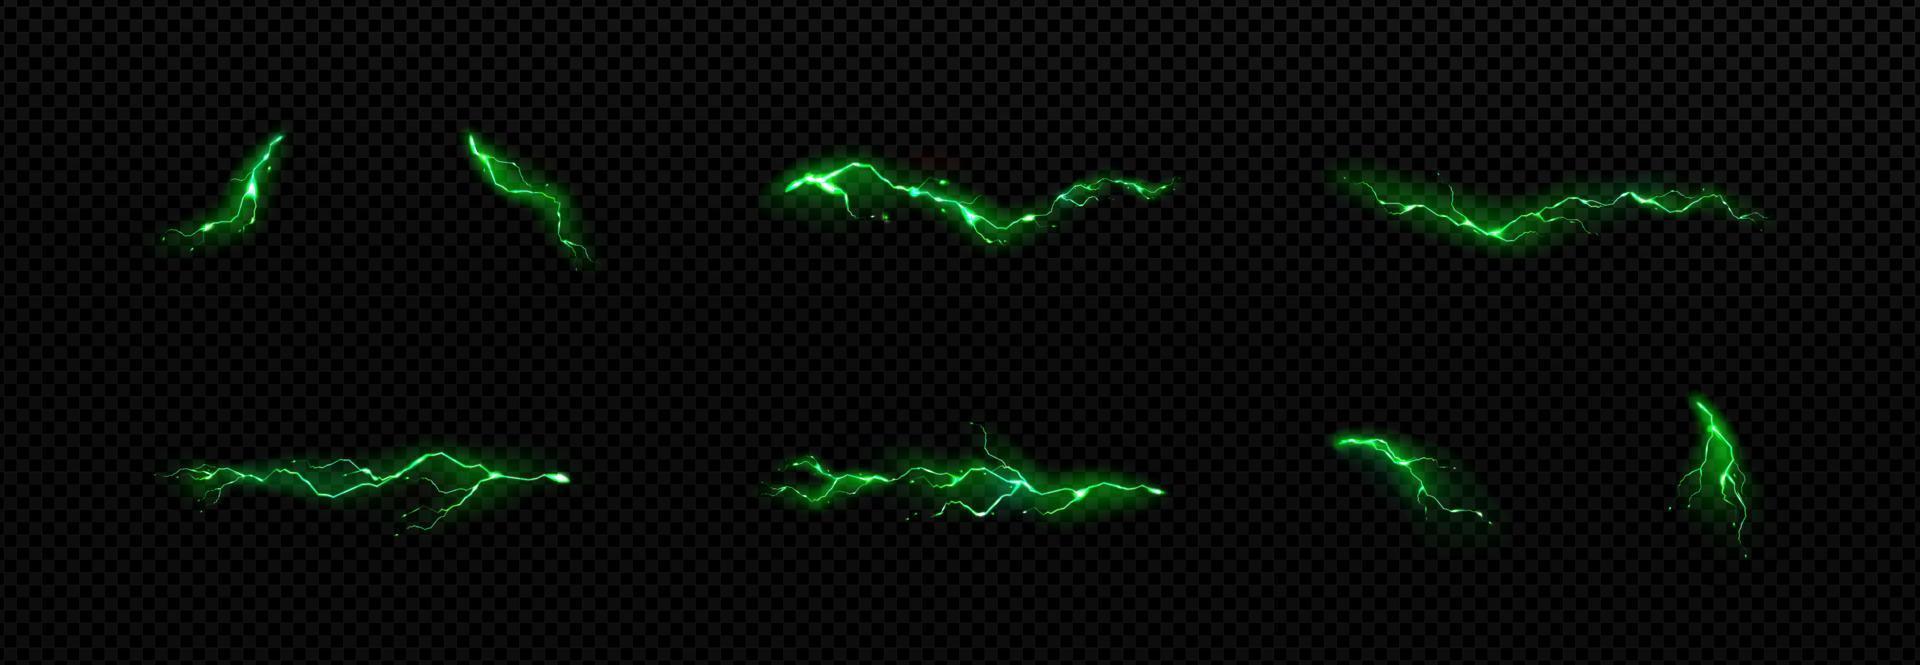 Green lightnings, thunderbolt discharges vector